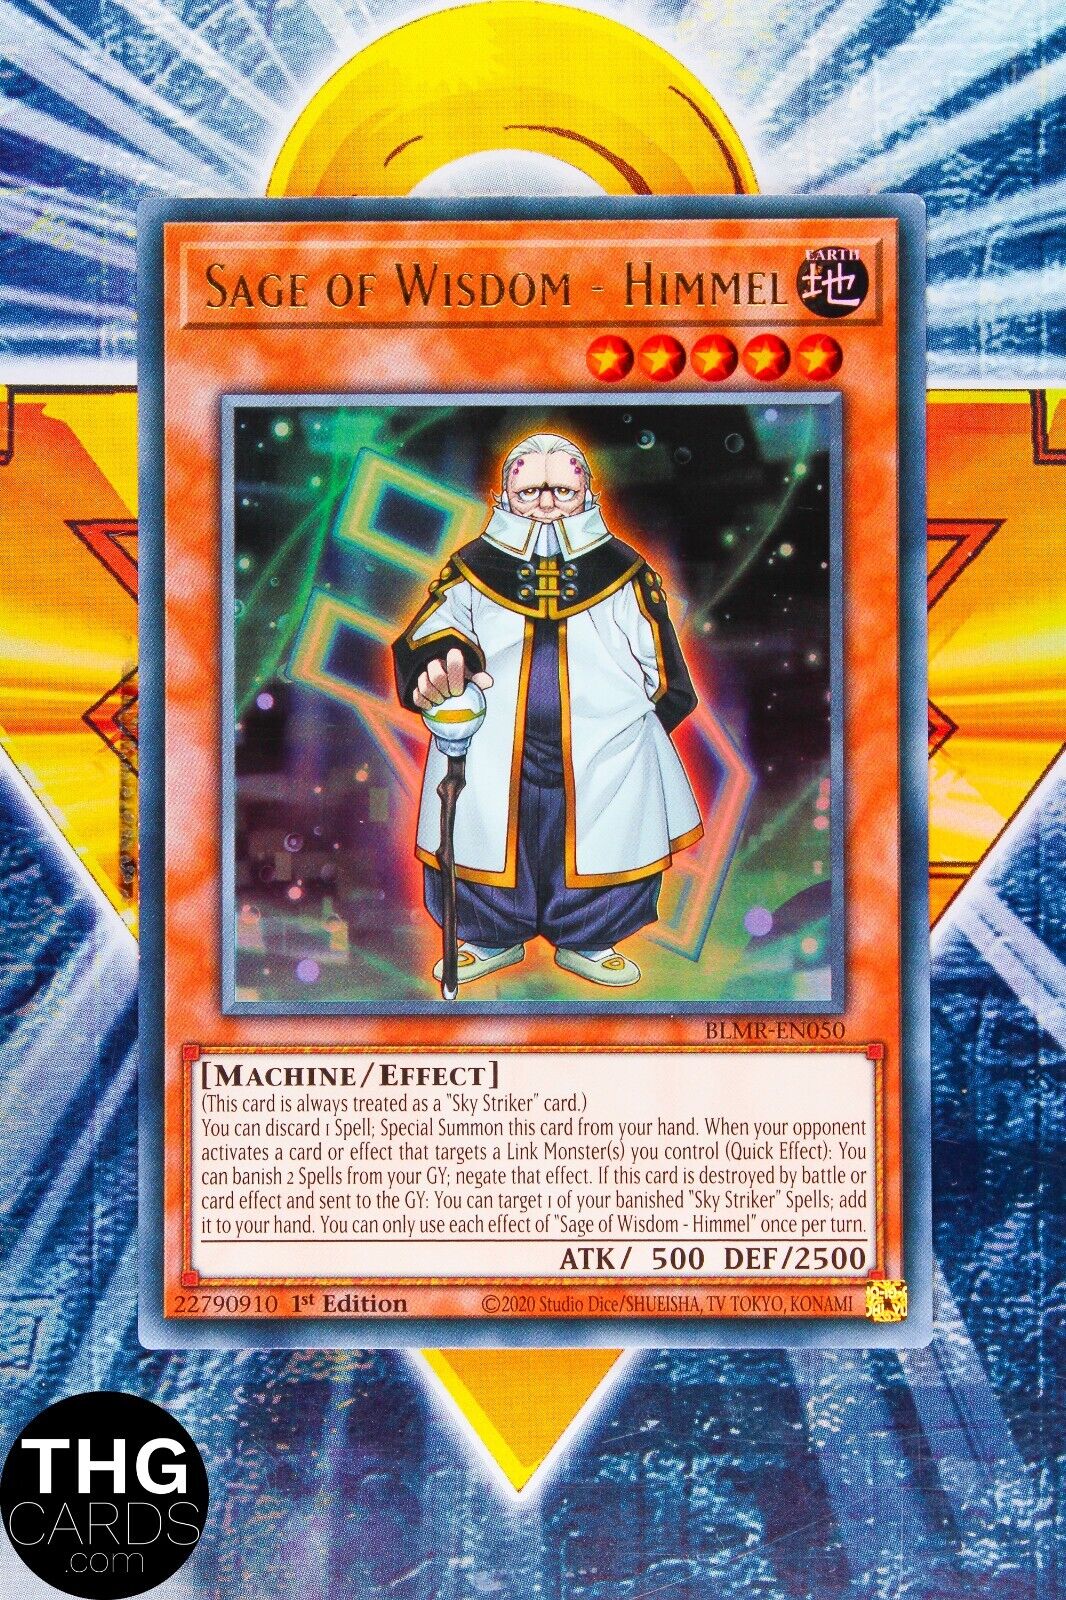 Sage of Wisdom - Himmel BLMR-EN050 1st Edition Ultra Rare Yugioh Card Playset